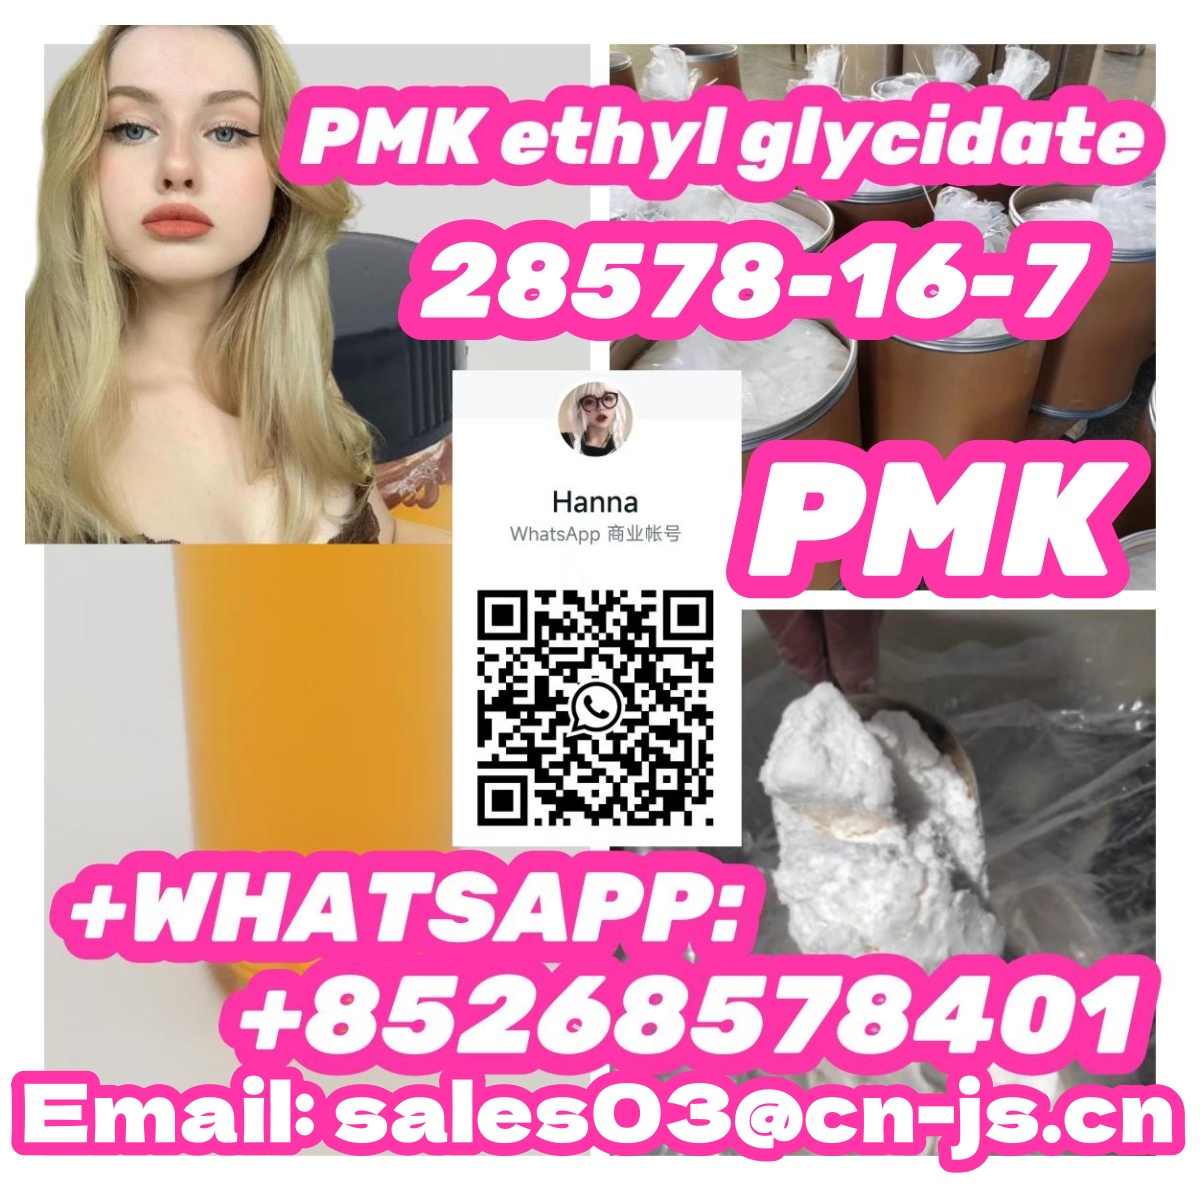 Free sample PMK ethyl glycidate 28578-16-7 